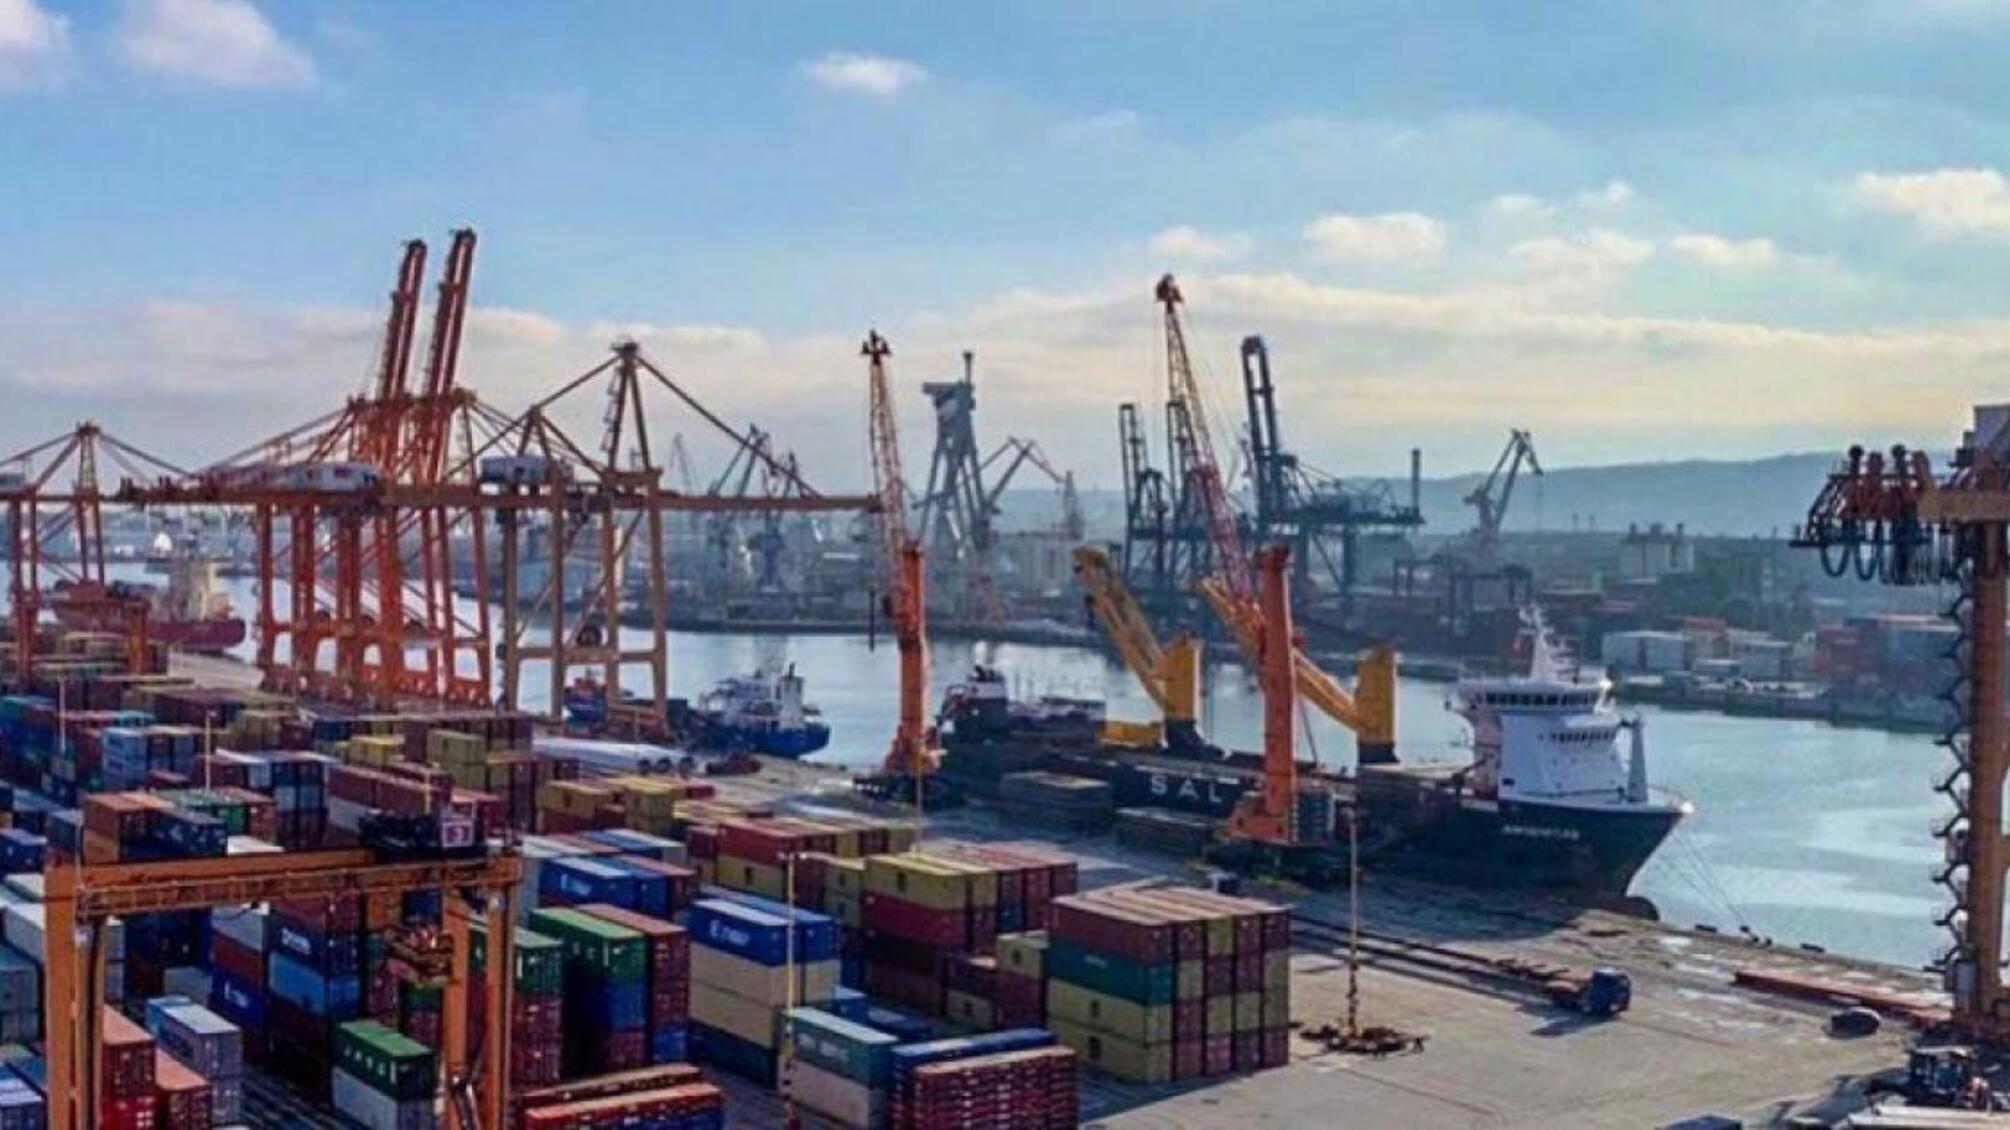 Ukrainian Sea Ports Authority case: five persons were given notices of suspicion